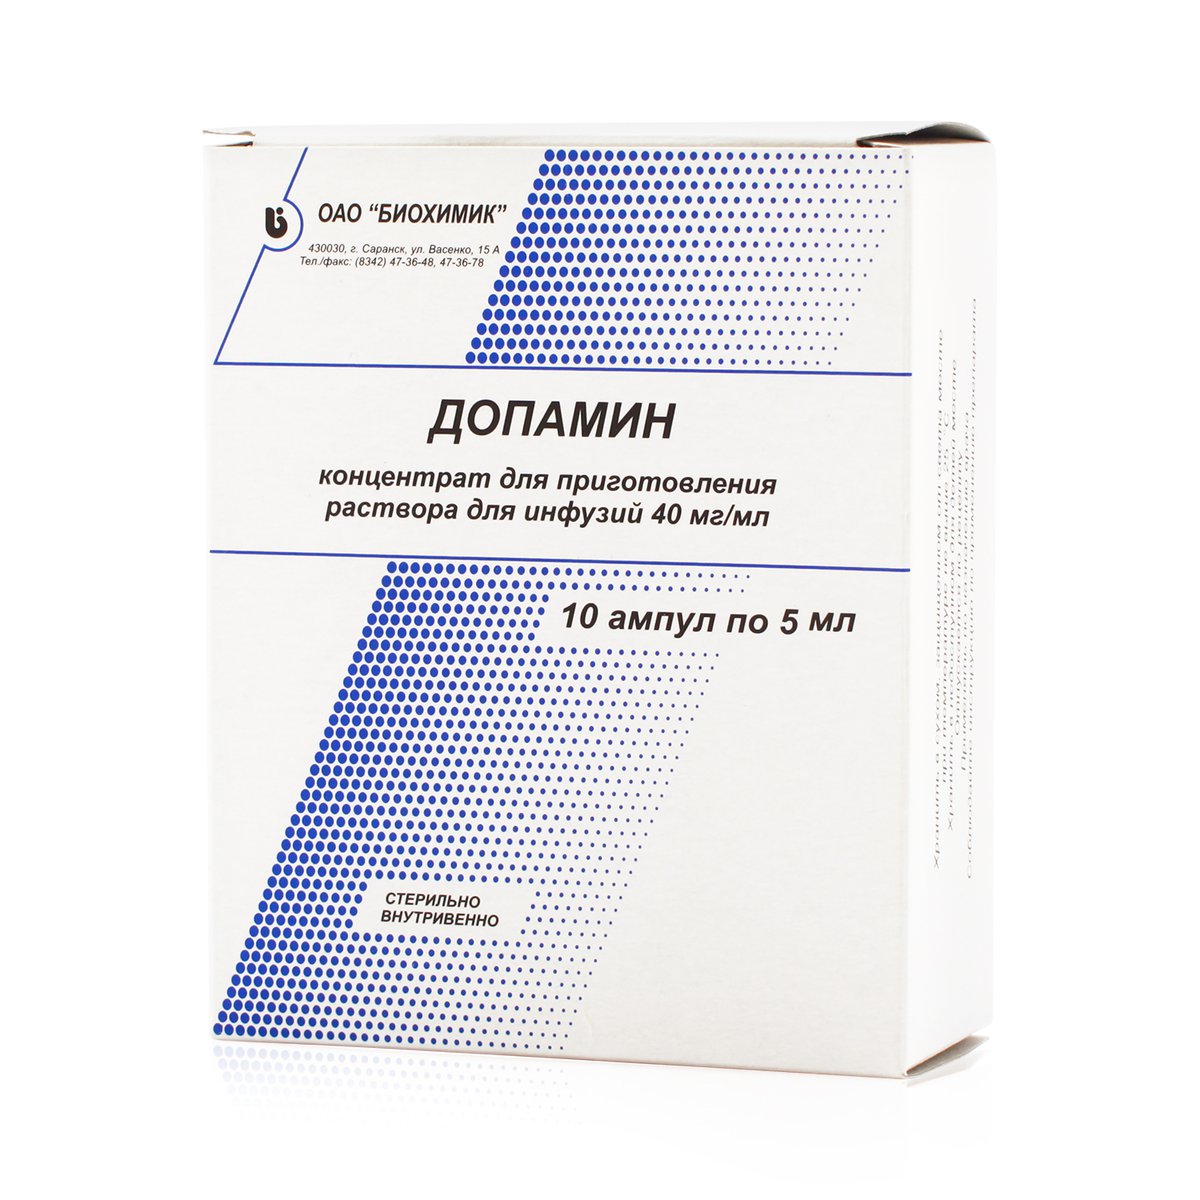 Допамин (концентрат, 10 шт, 5 мл, 40 мг/мл, для инфузий) - цена,  .